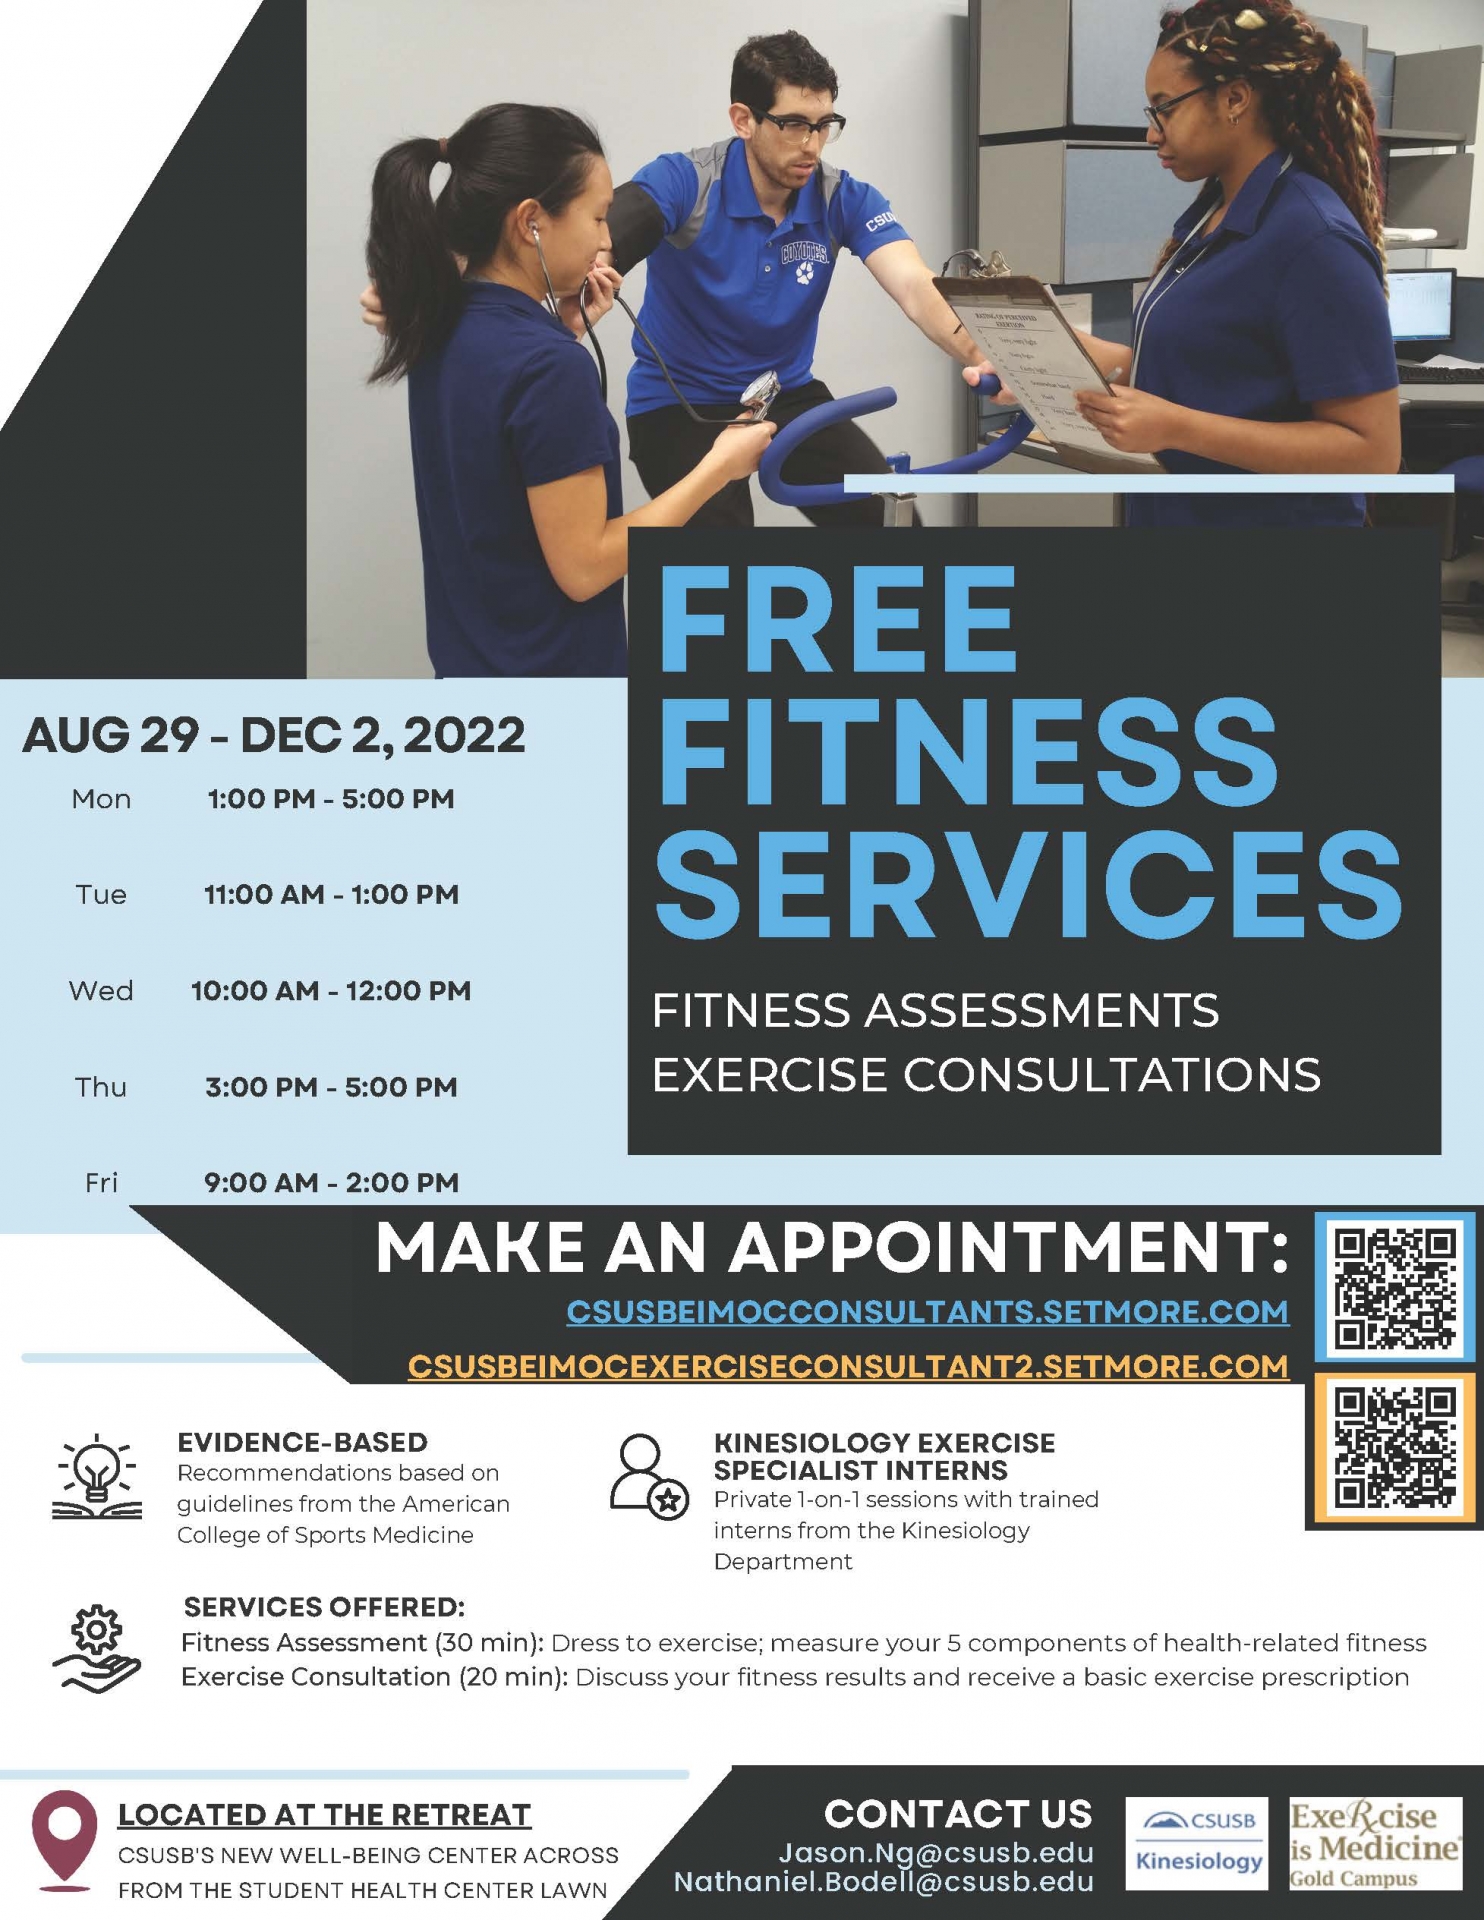 EIM-OC Fitness Services Flyer